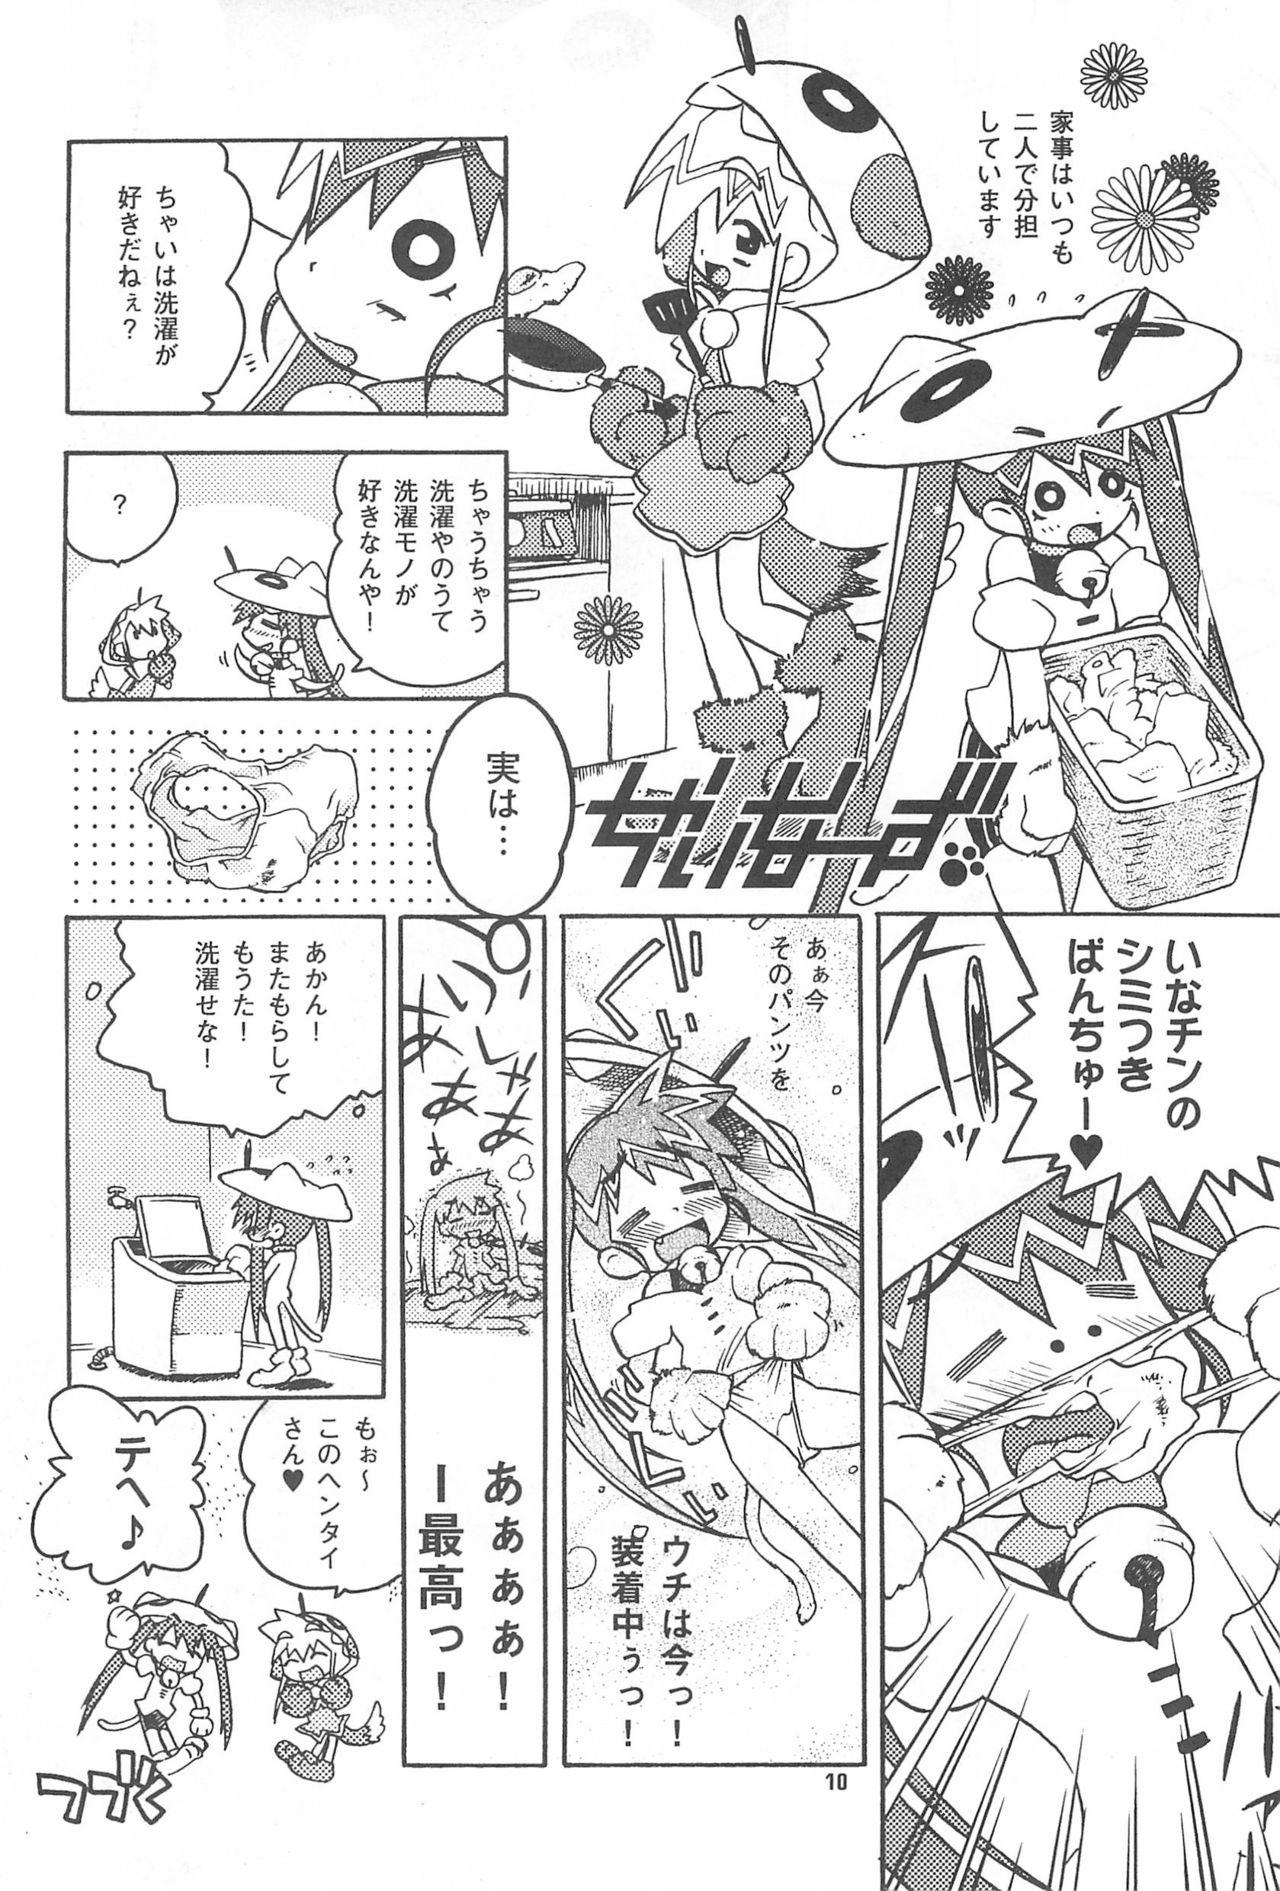 Hardcore Free Porn Rokusai+2 Duro - Page 10